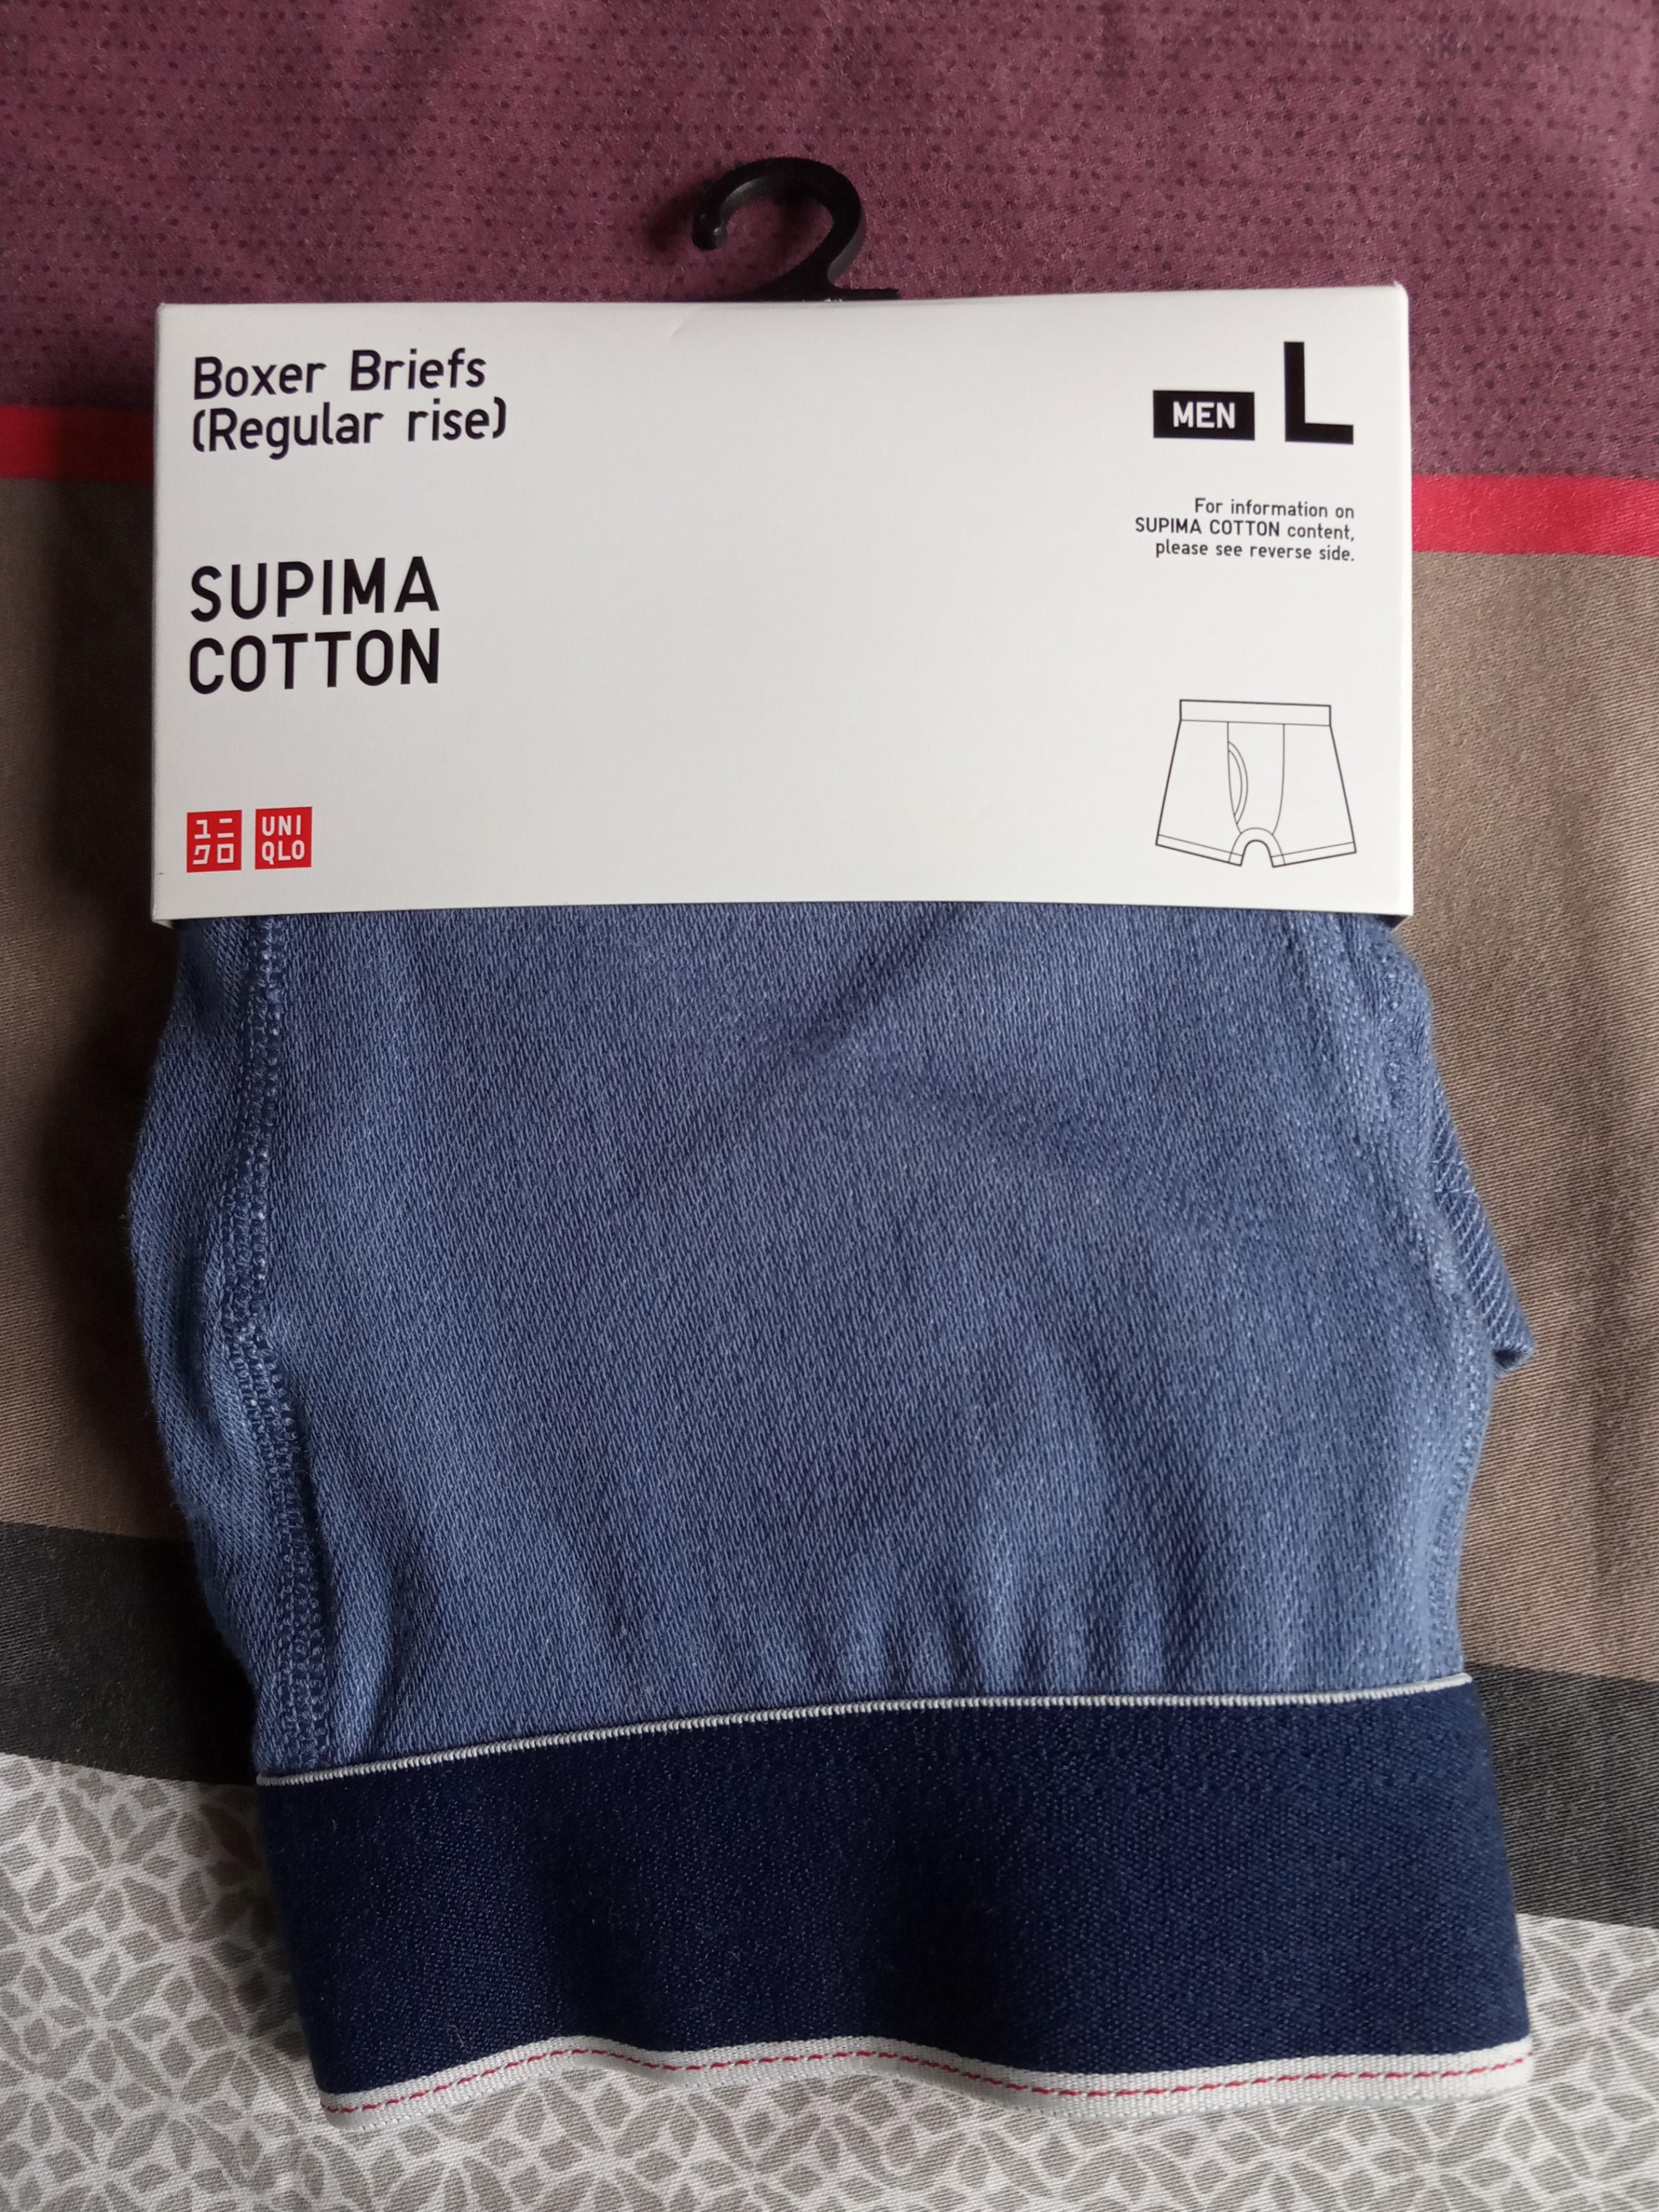 UNIQLO on X: Supima Cotton Boxer Briefs are soft and smooth where